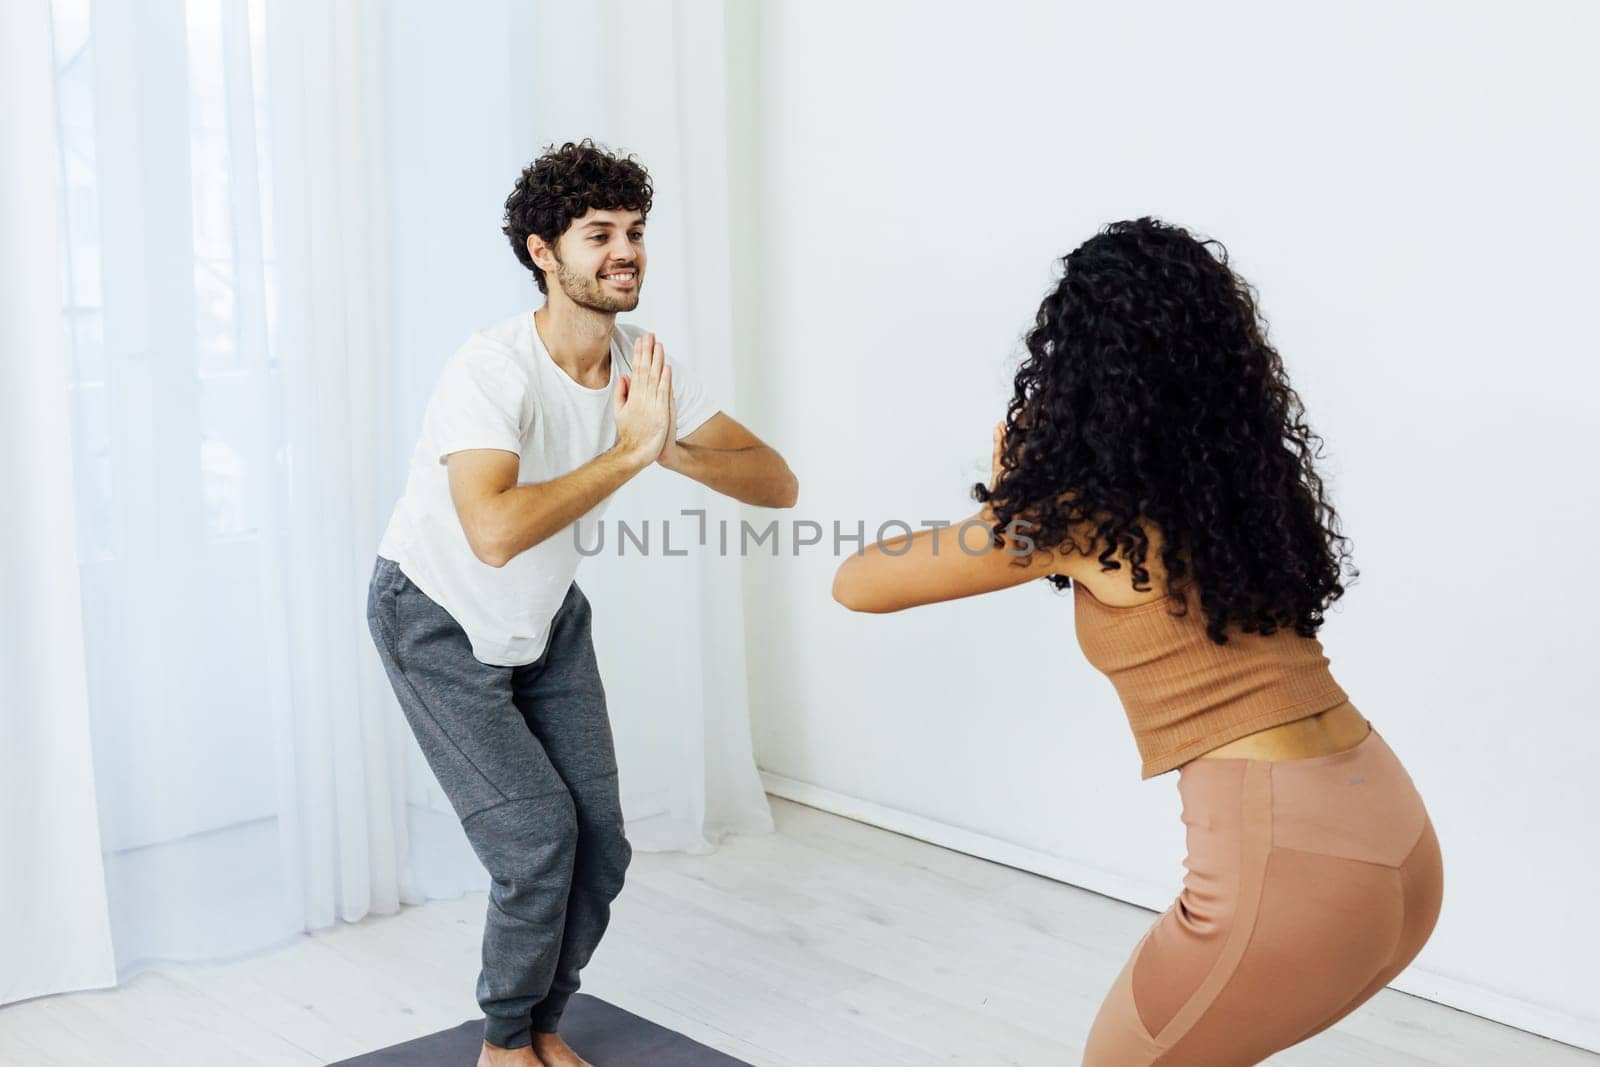 woman and a man do gymnastics warm-up exercises yoga asana poses